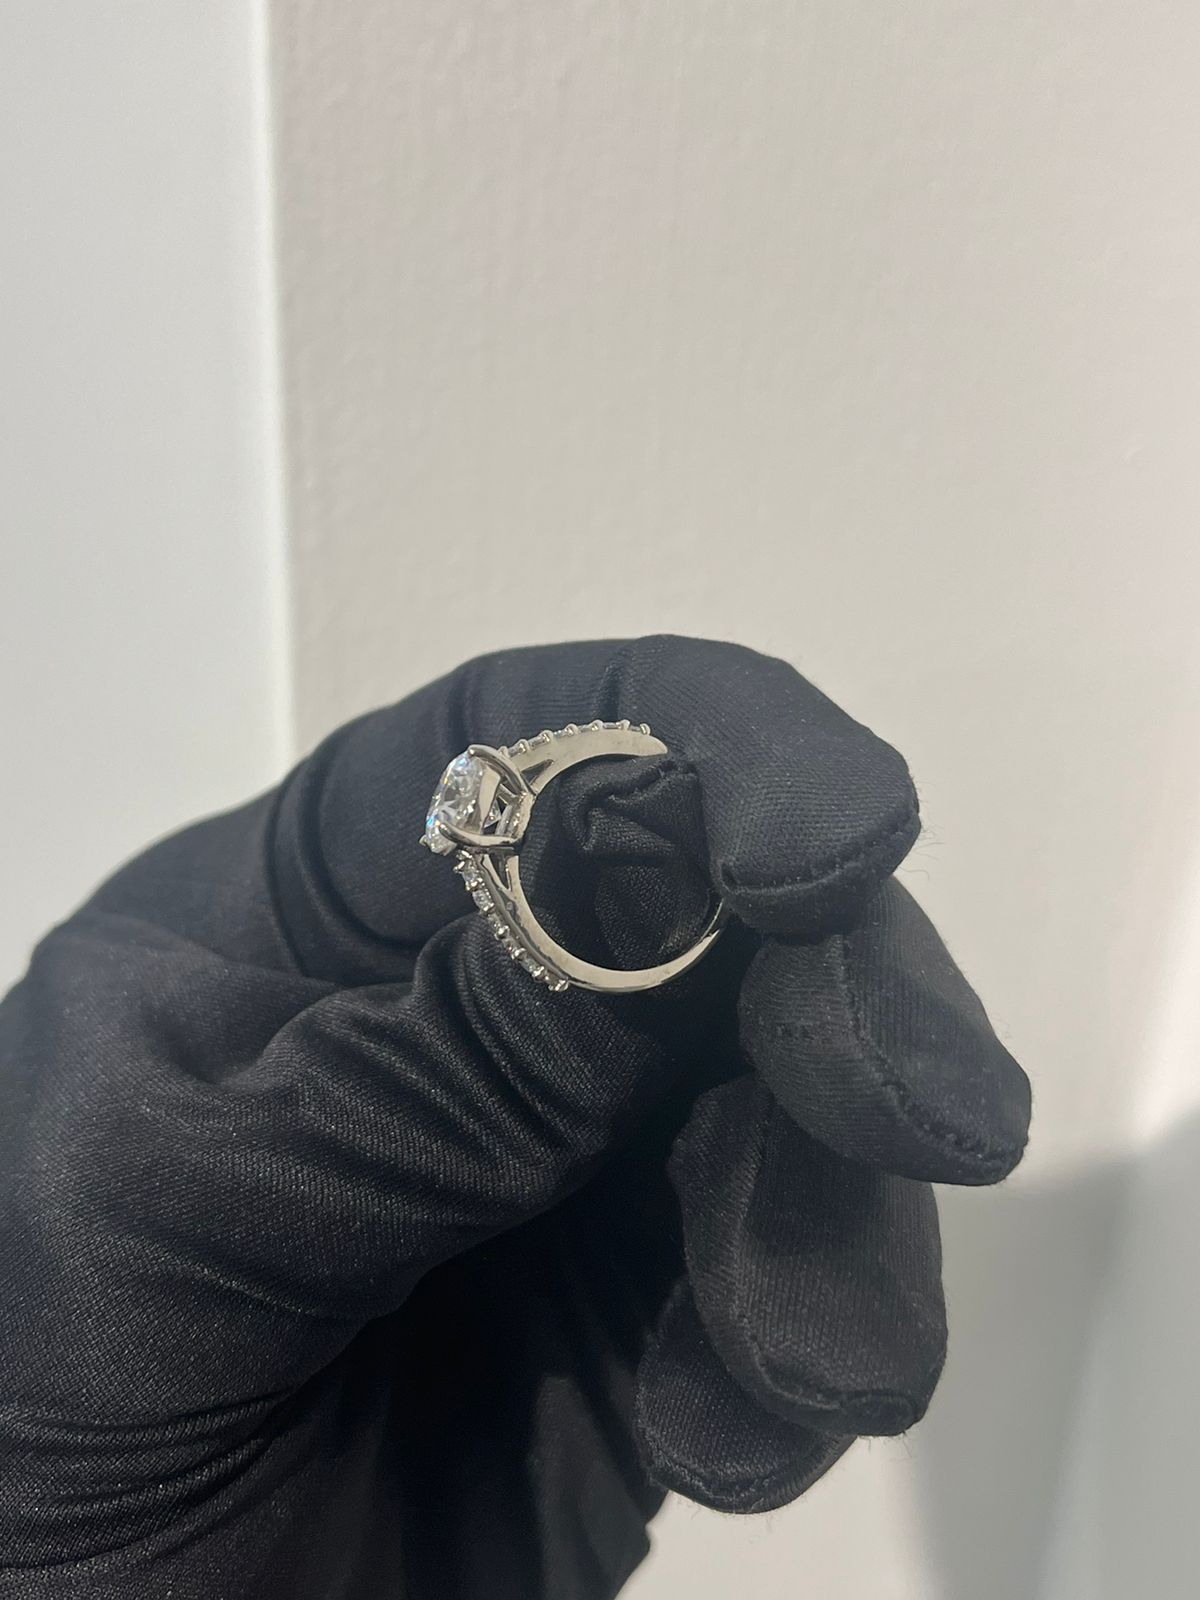 Popular International Design 2 Carat Moissanite Diamond Ring Set on Pure Silver 925 White Gold Plating